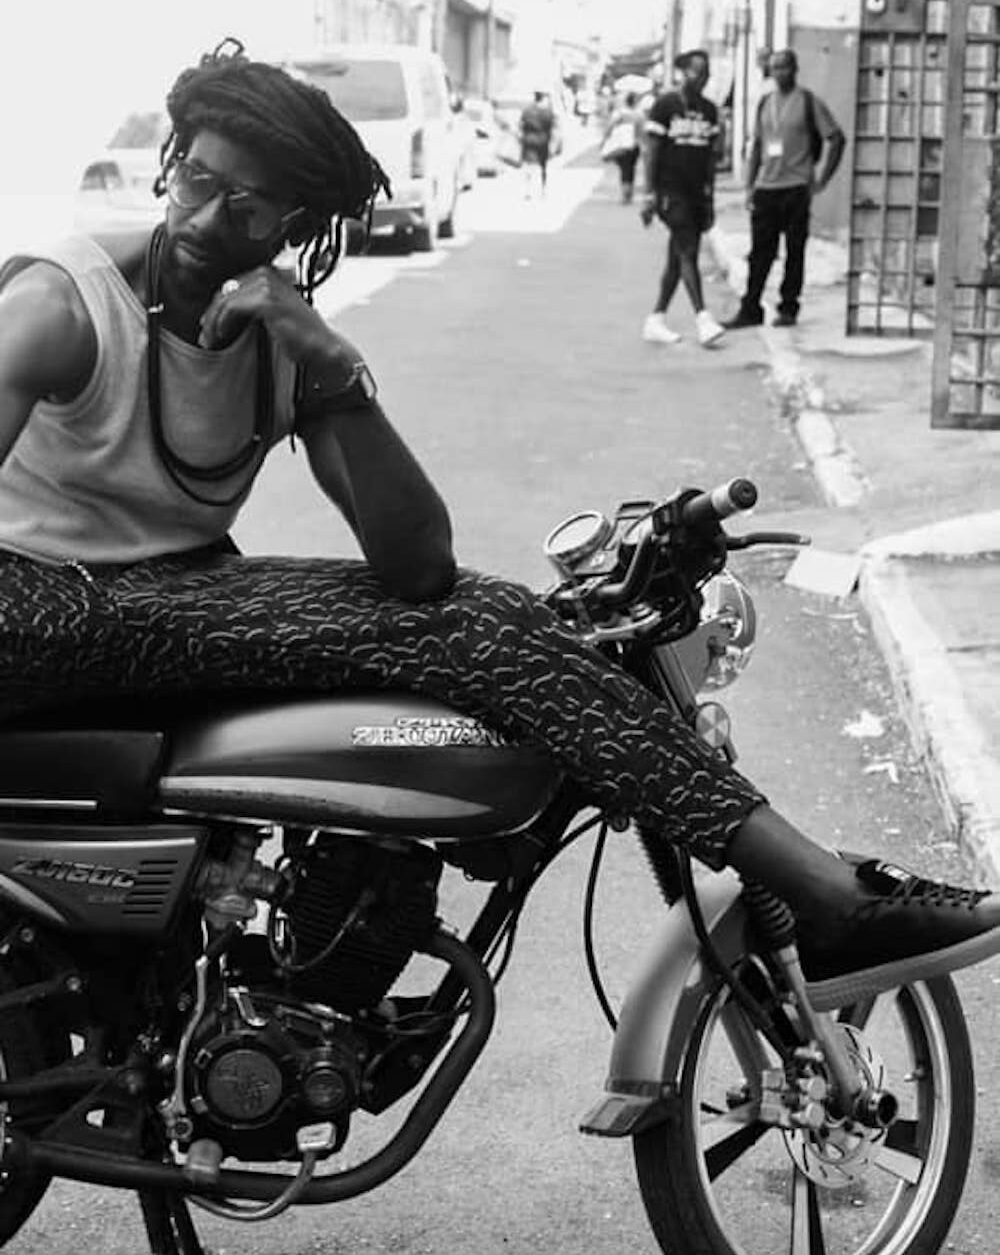 Buju Banton's New Albums 'Upside Down 2020' Enters Billboard Reggae Chart